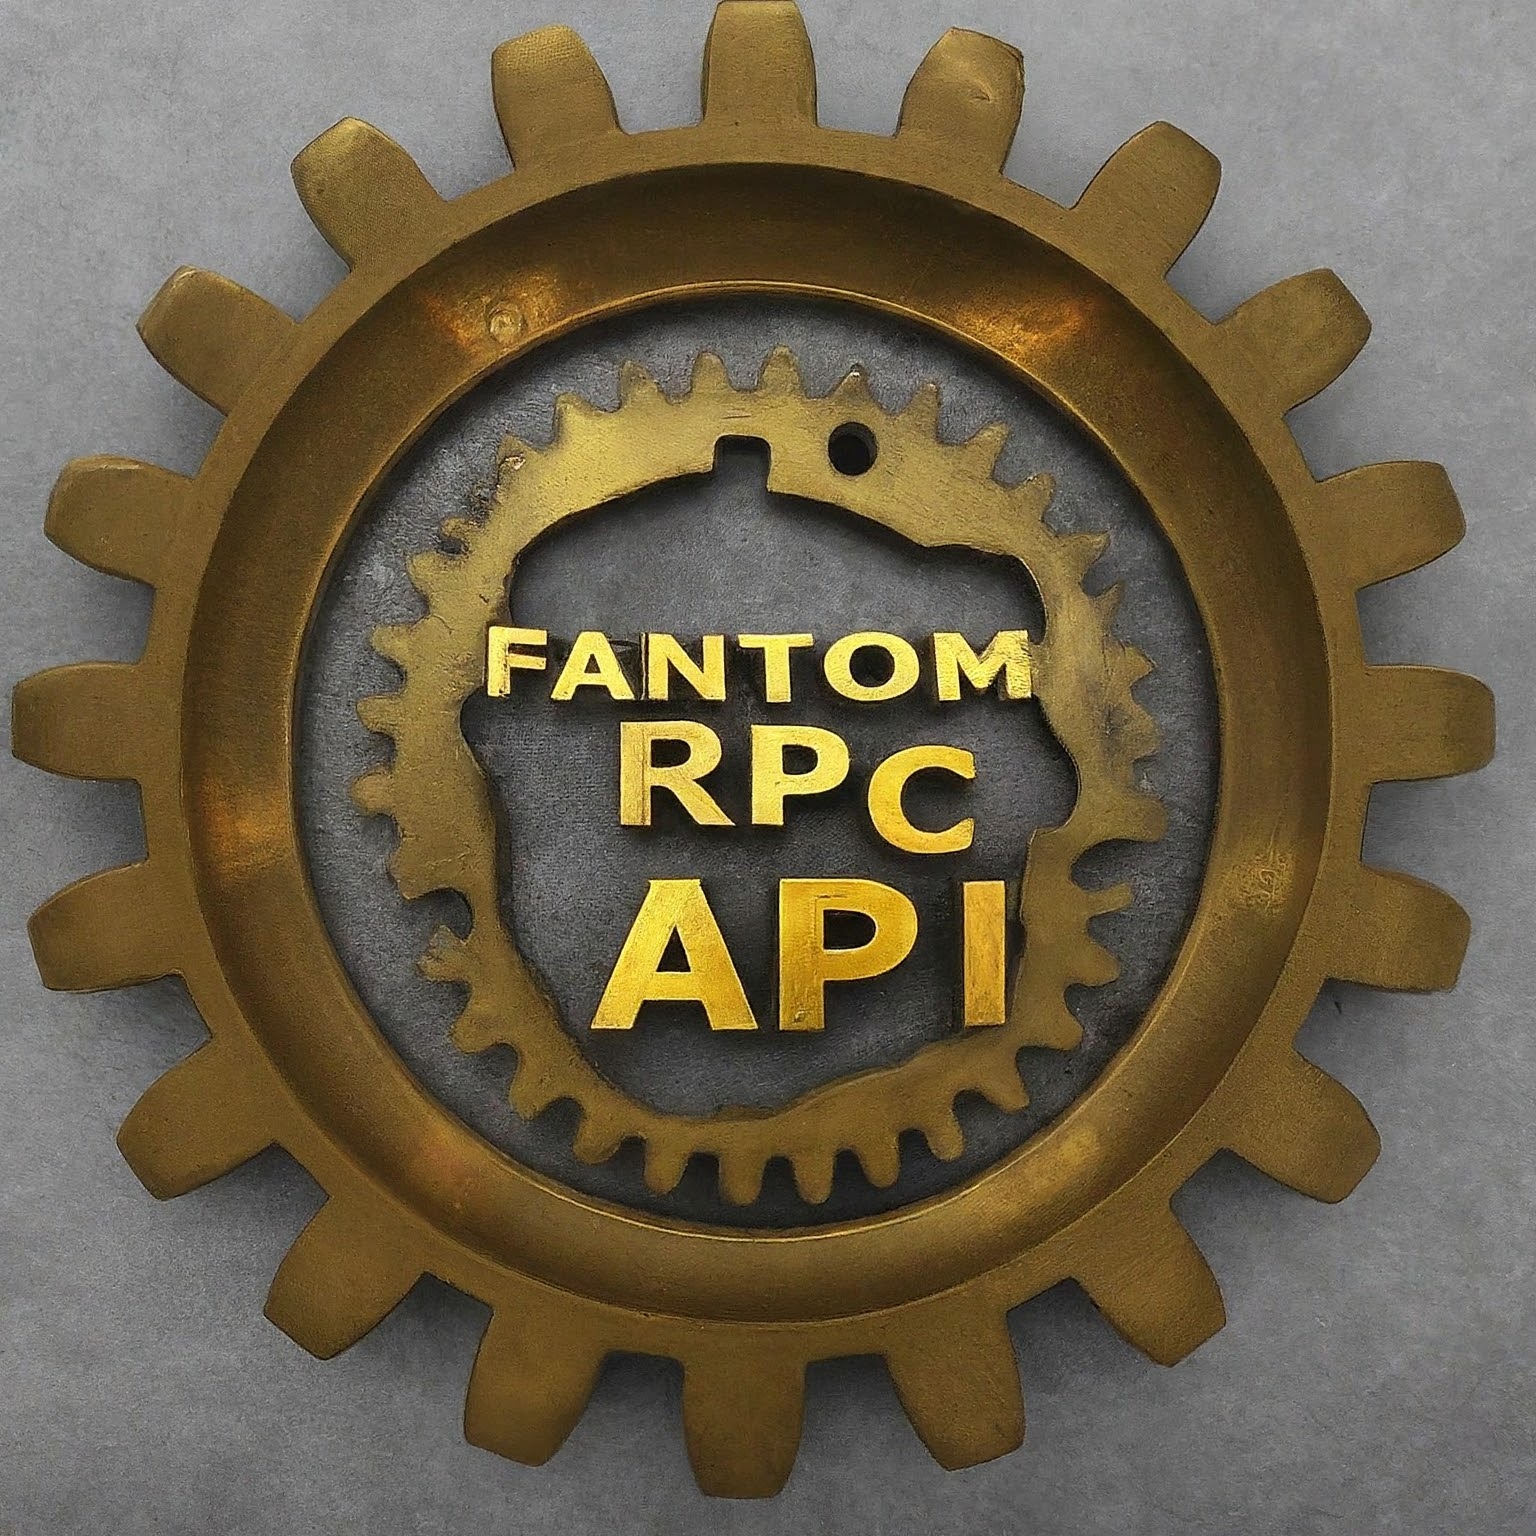 What is Fantom RPC API?